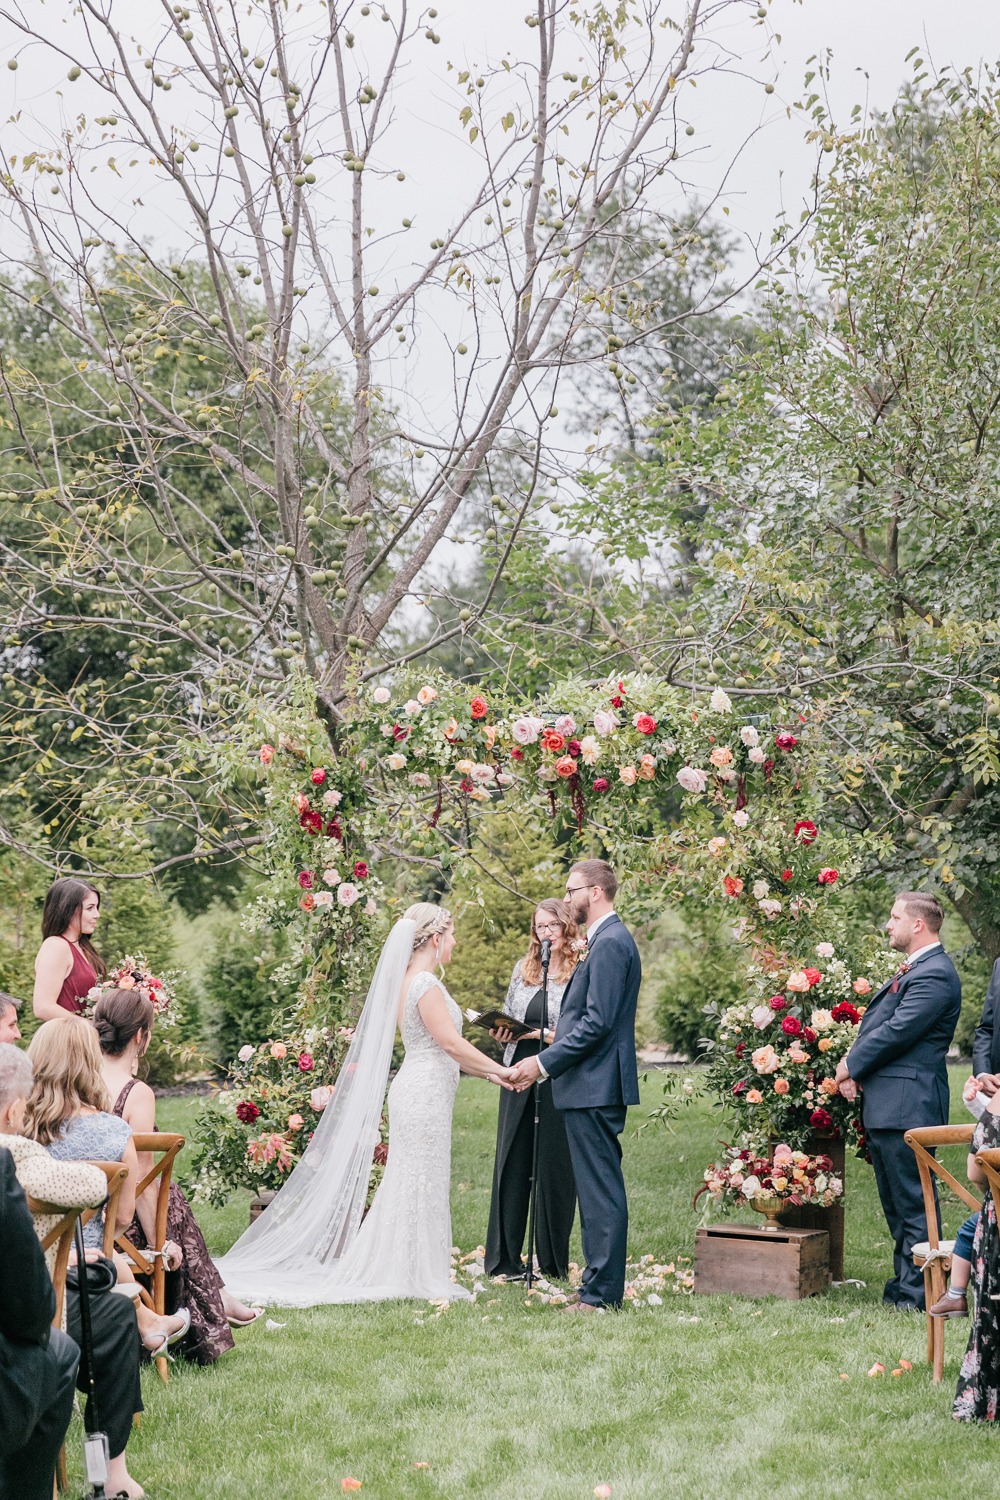 Outdoor rose wedding arbor